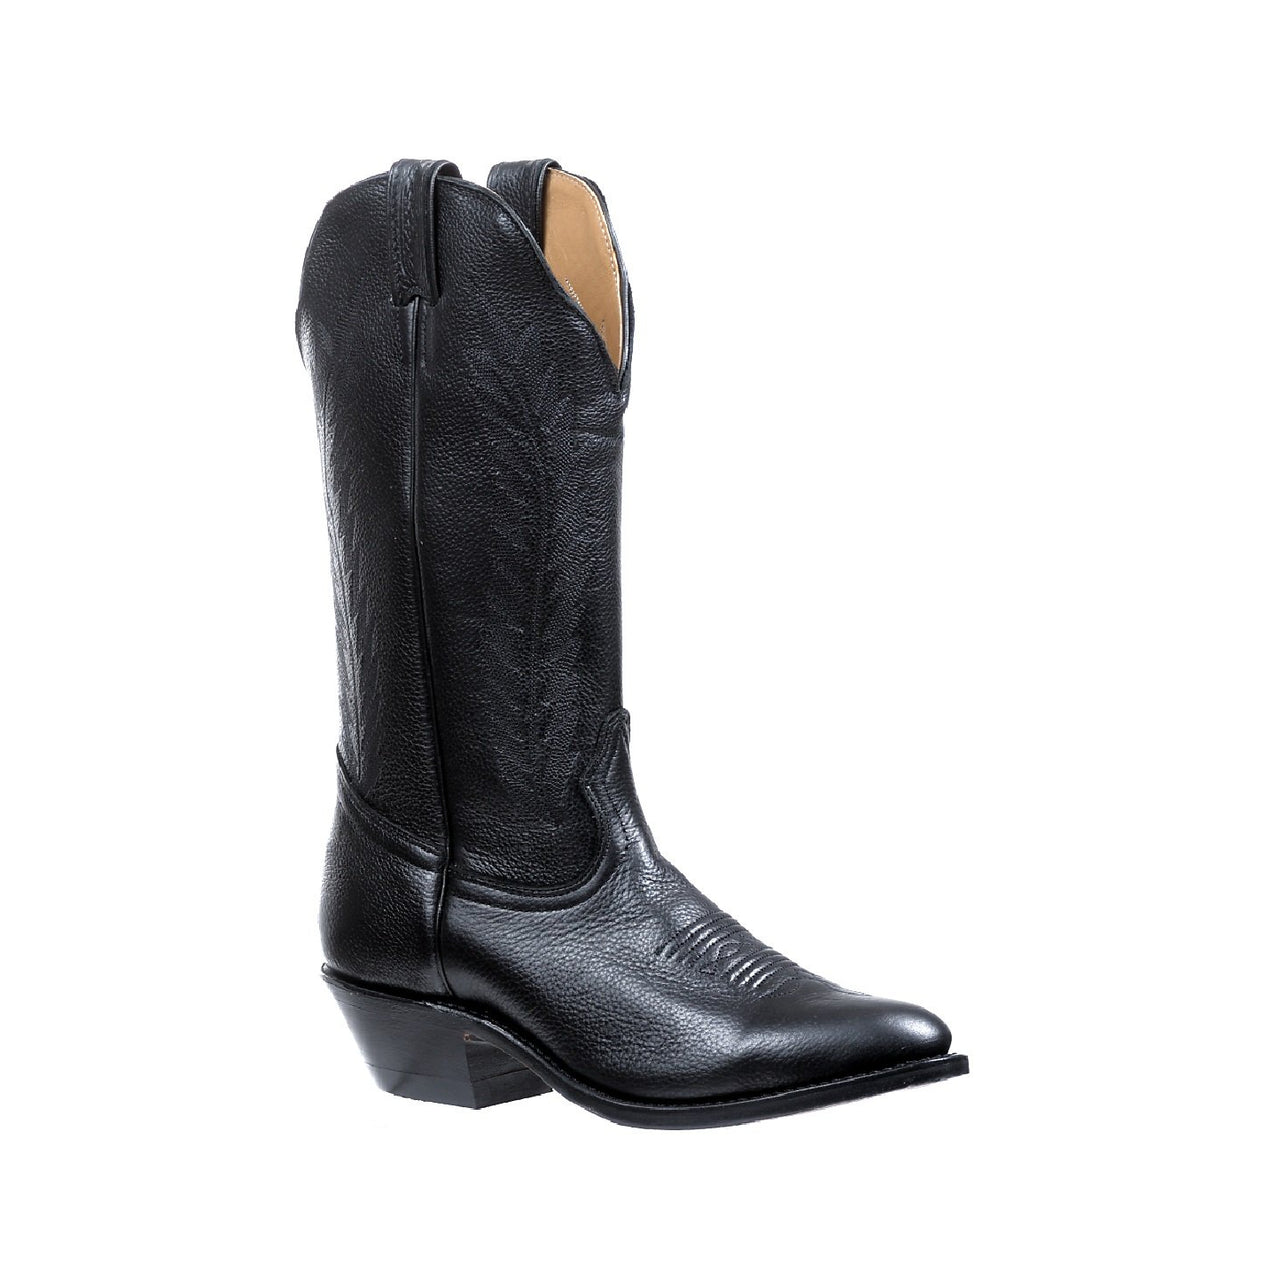 Boulet Women's Medium Cowboy Toe Western Boots - Sporty Black Deer Tan